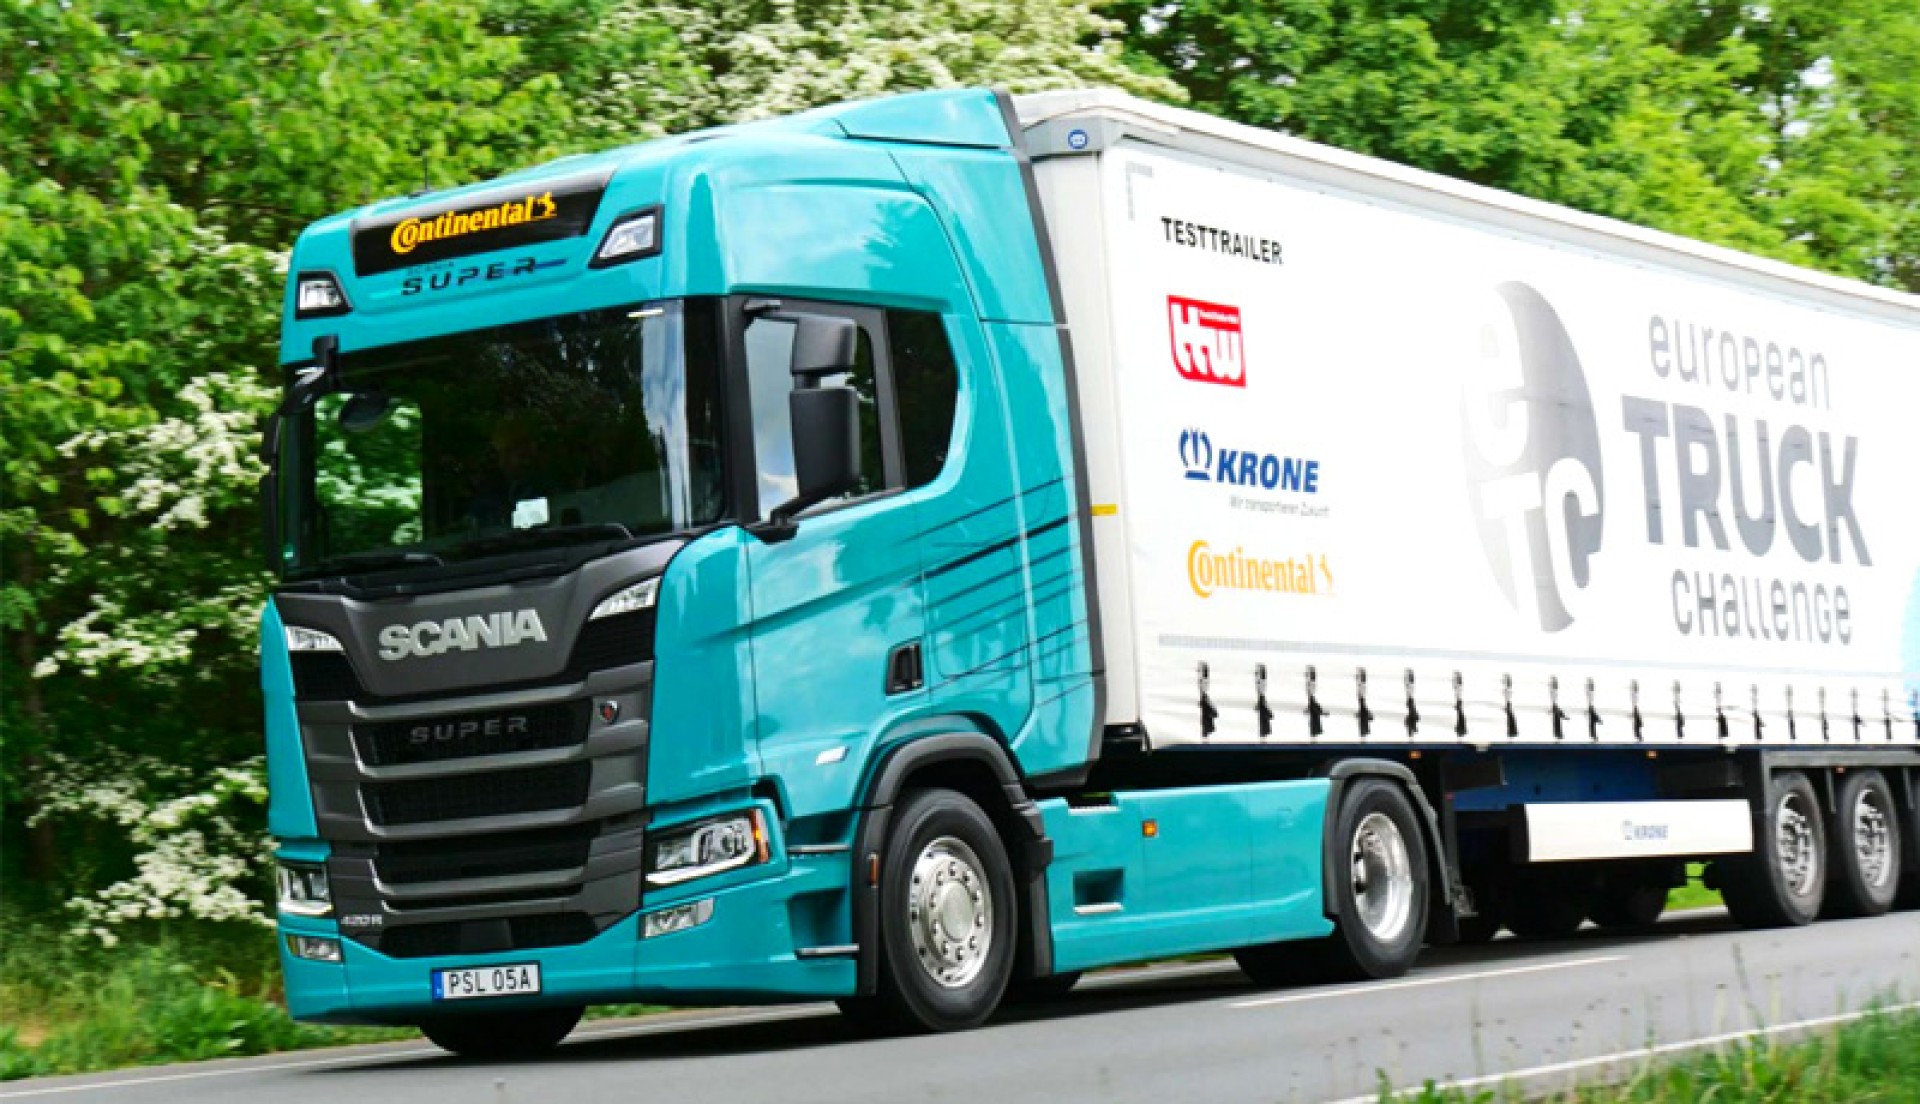 Scania Super este cel mai eficient camion din punct de vedere al consumului de combustibil de la ETC